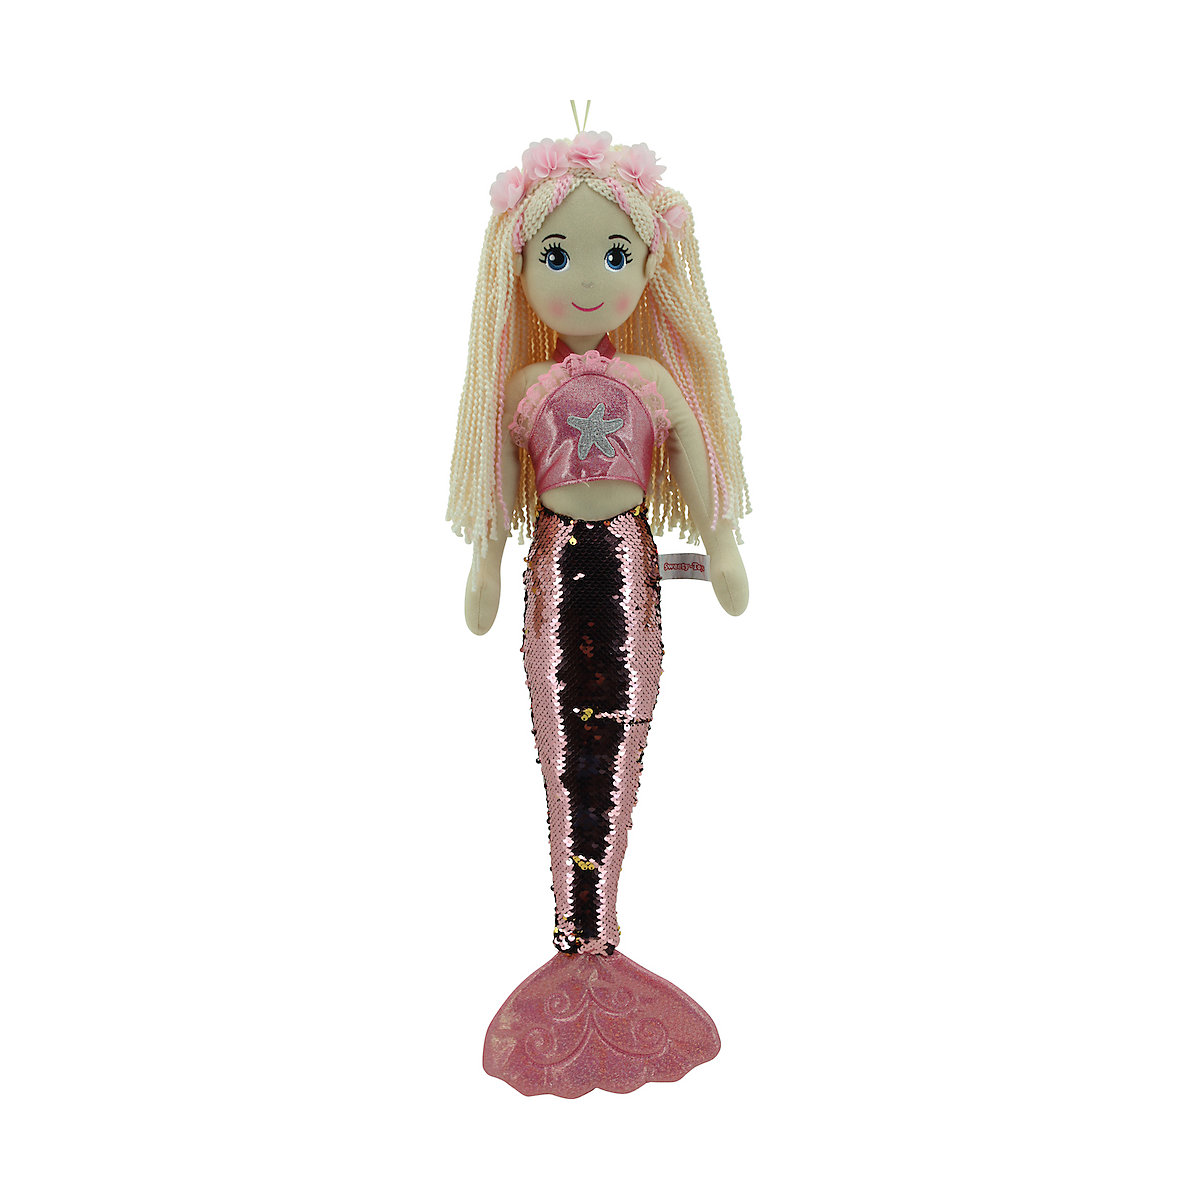 Sweety-Toys Sweety Toys 11889 Stoffpuppe Meerjungfrau Plüschtier Prinzessin 70 cm rosa